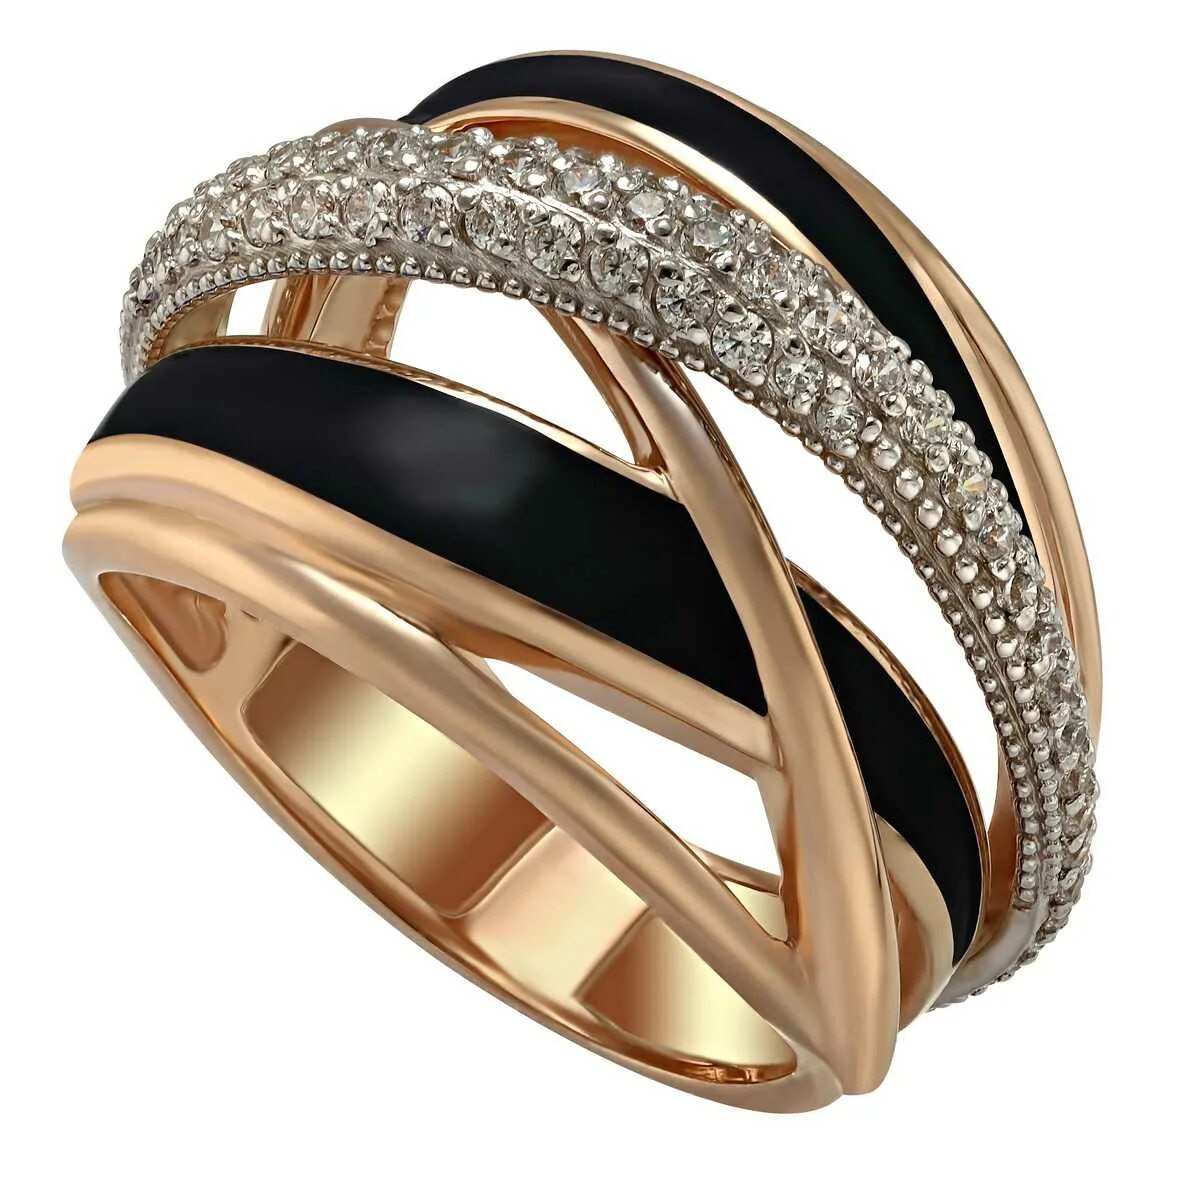 Gold кольца. Золотое кольцо. Кольца золото женские. Двойное кольцо золотое. Широкое золотое кольцо с фианитами.